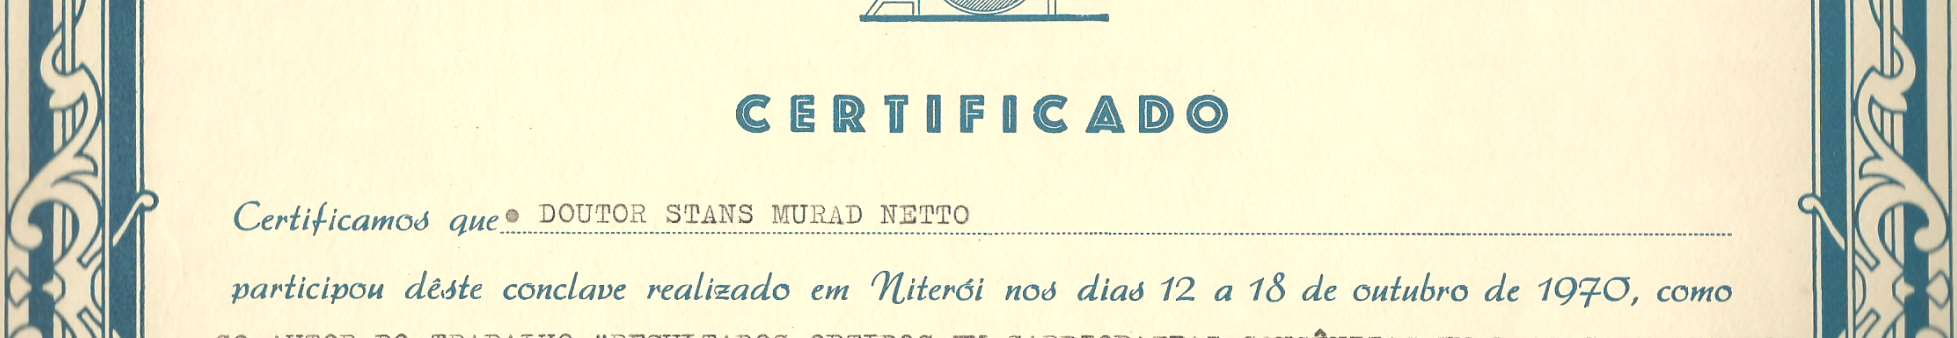 1970:Certificado - XI Congresso Médico